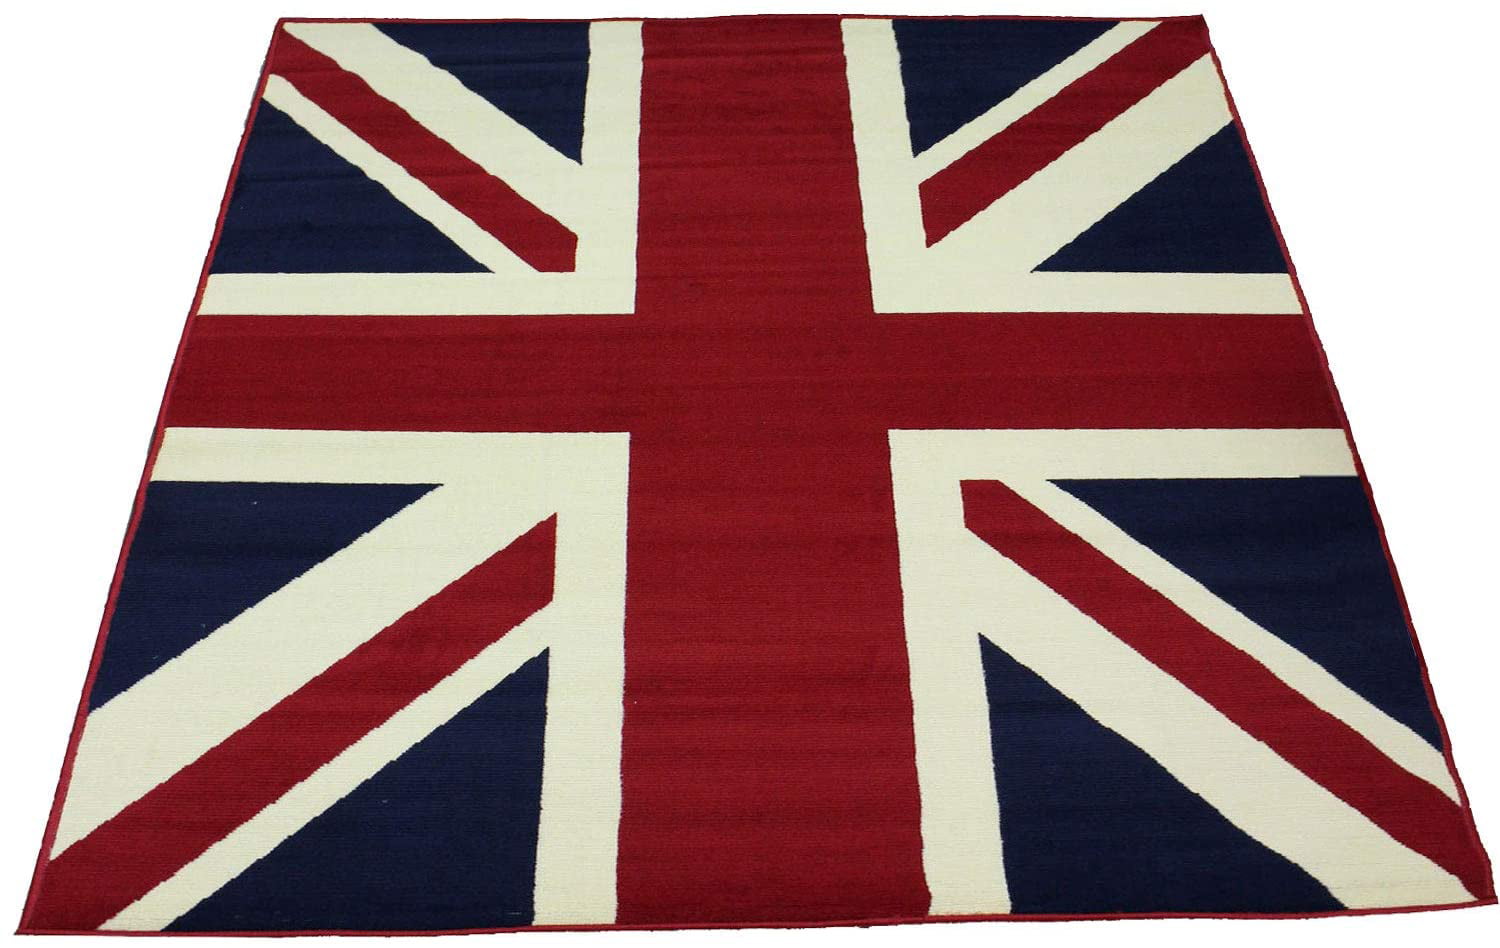 ALAZA Retro Union Jack British Flag Non Slip Area Rug 5' x 7' for Living Dinning Room Bedroom Kitchen Hallway Office Modern Home Decorative